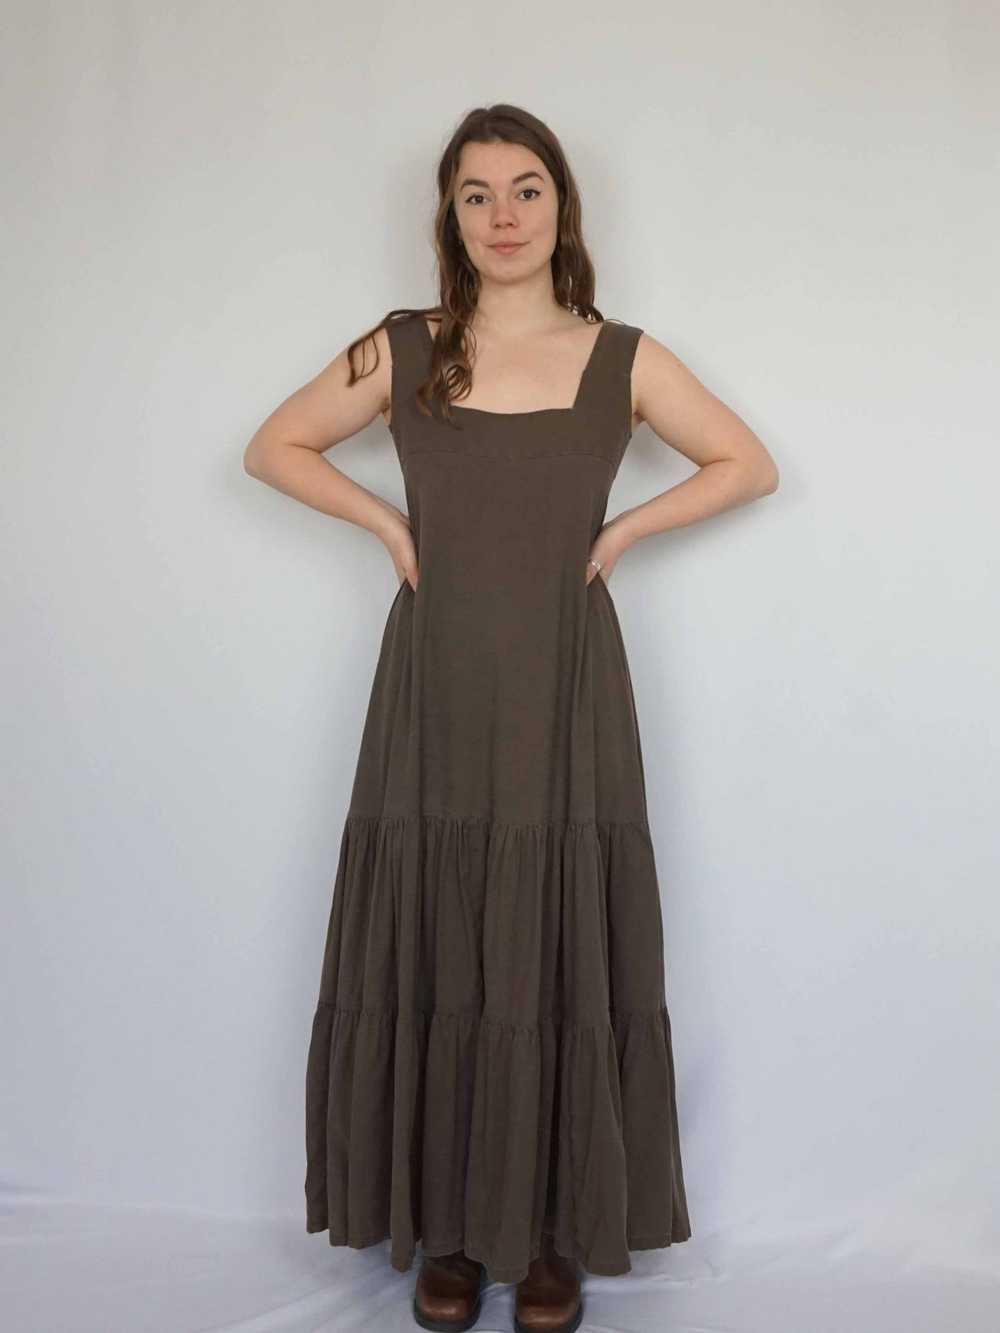 Laura Ashley Brown Pinafore Dress - S - image 5